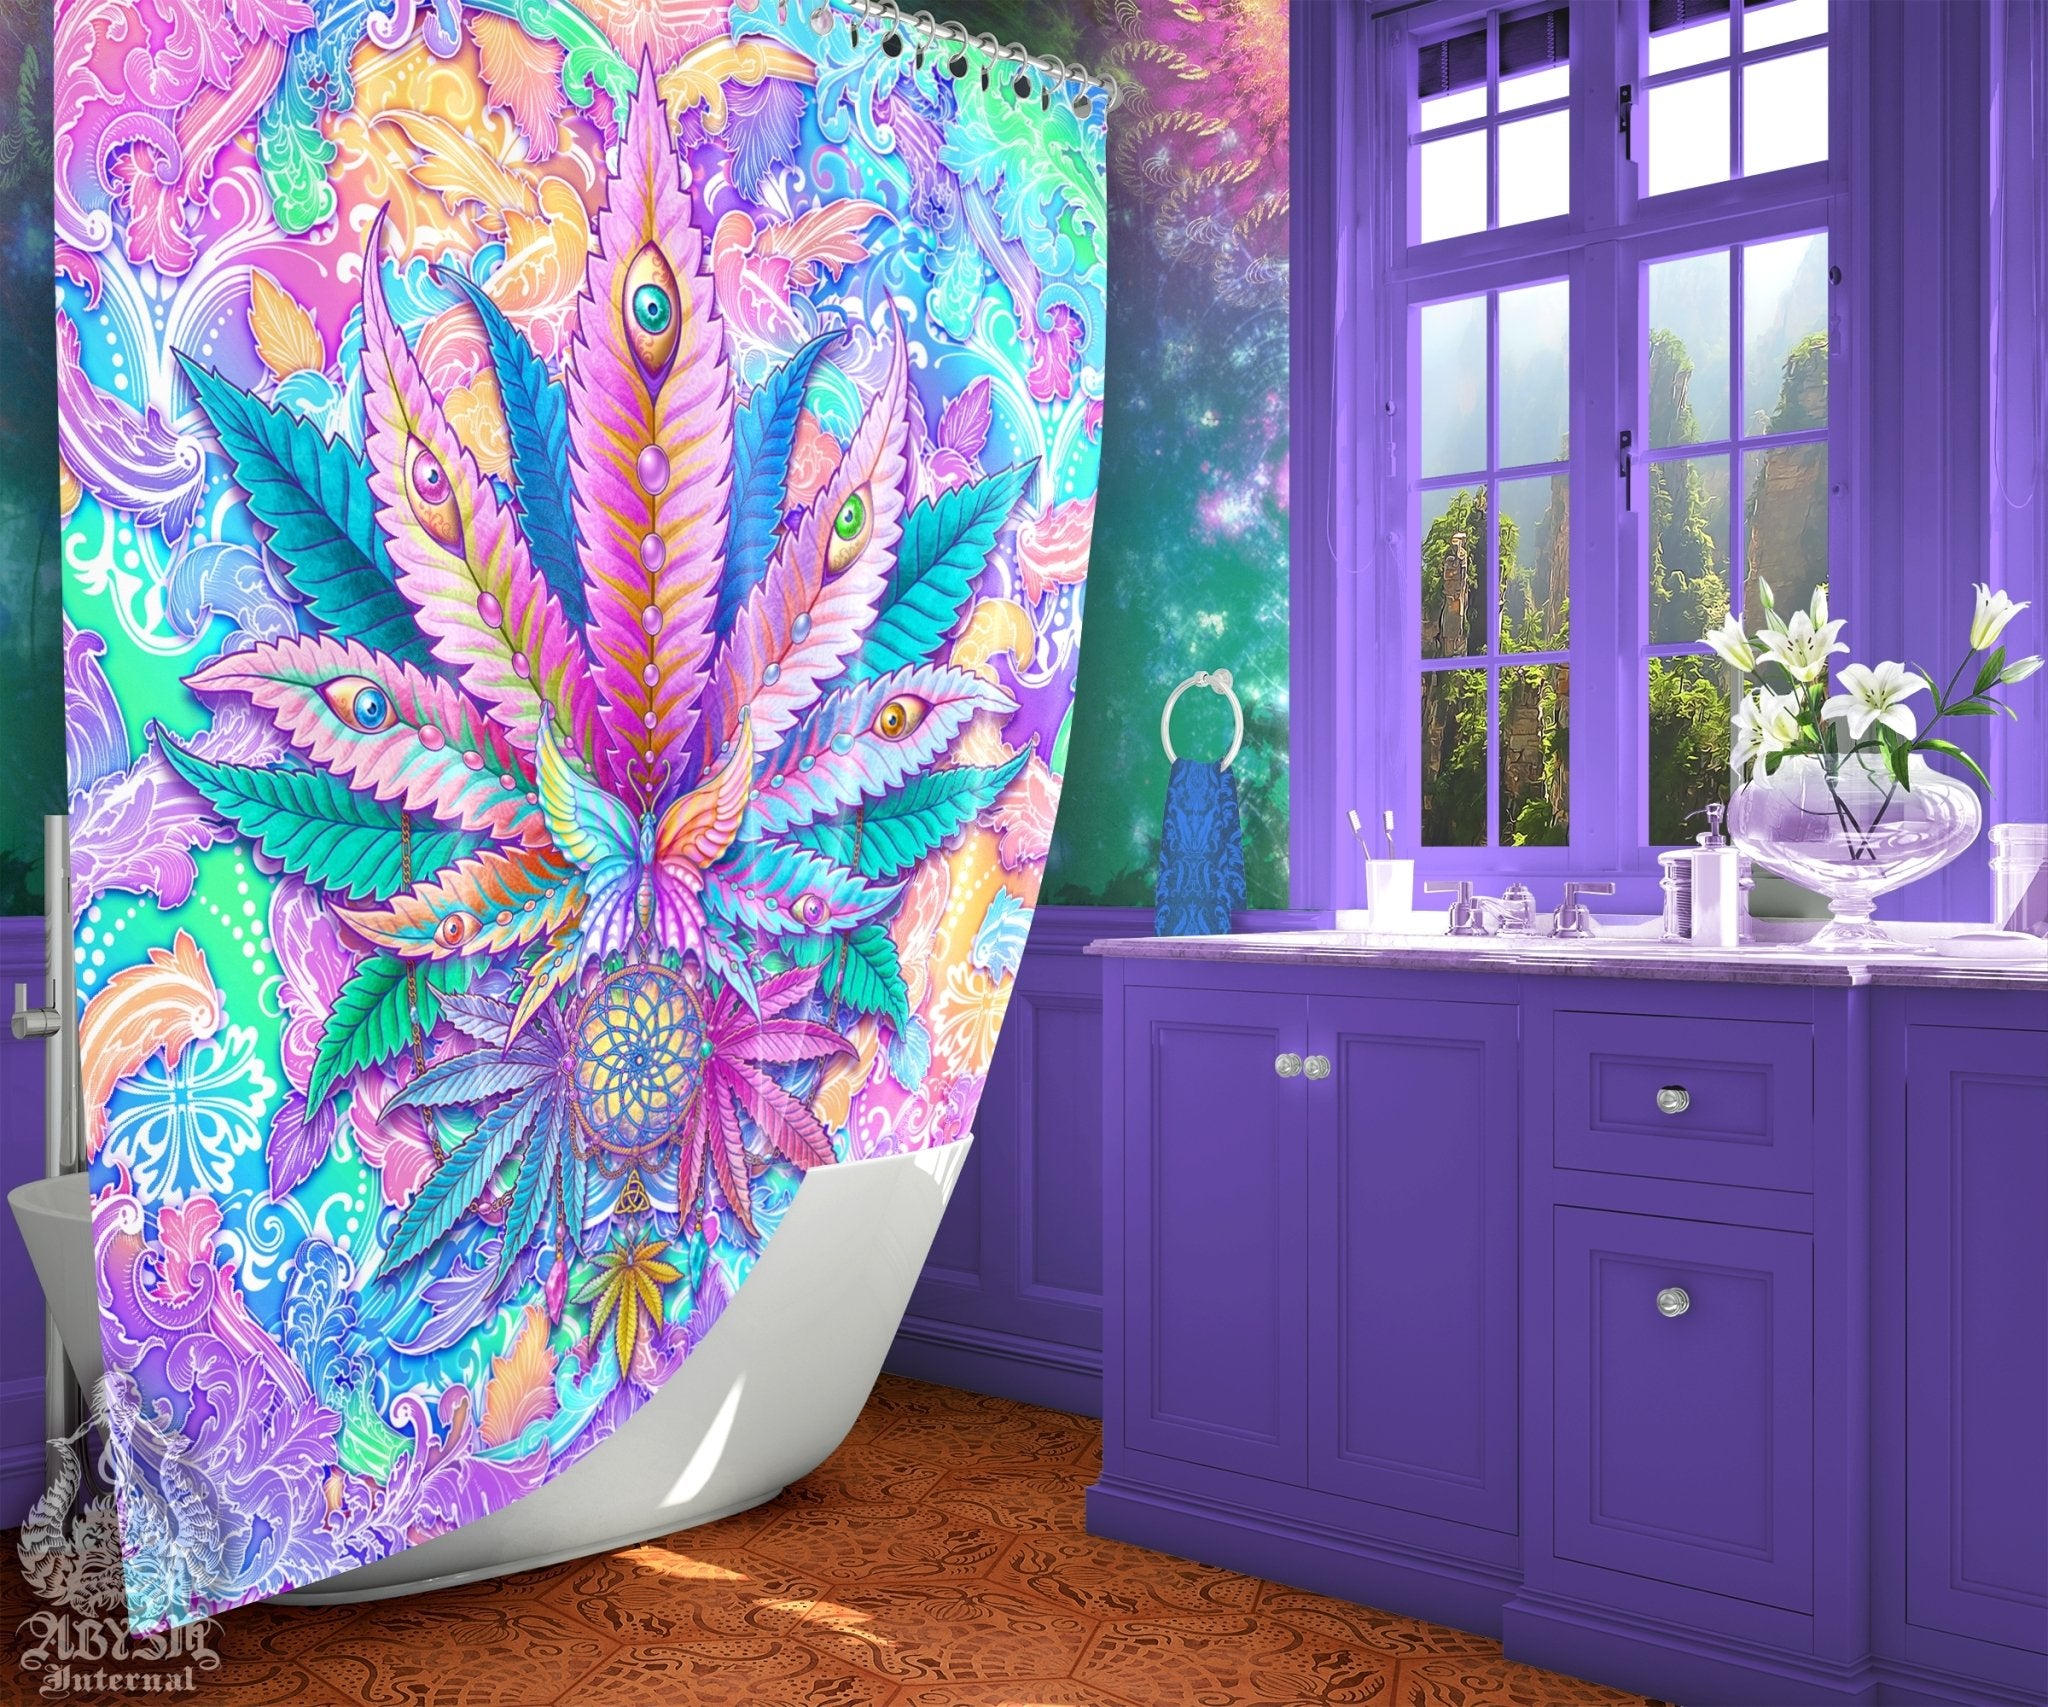 Pastel Weed Shower Curtain, Aesthetic Bathroom Decor, Indie Cannabis Print, Hippie 420 Home Art - Marijuana - Abysm Internal